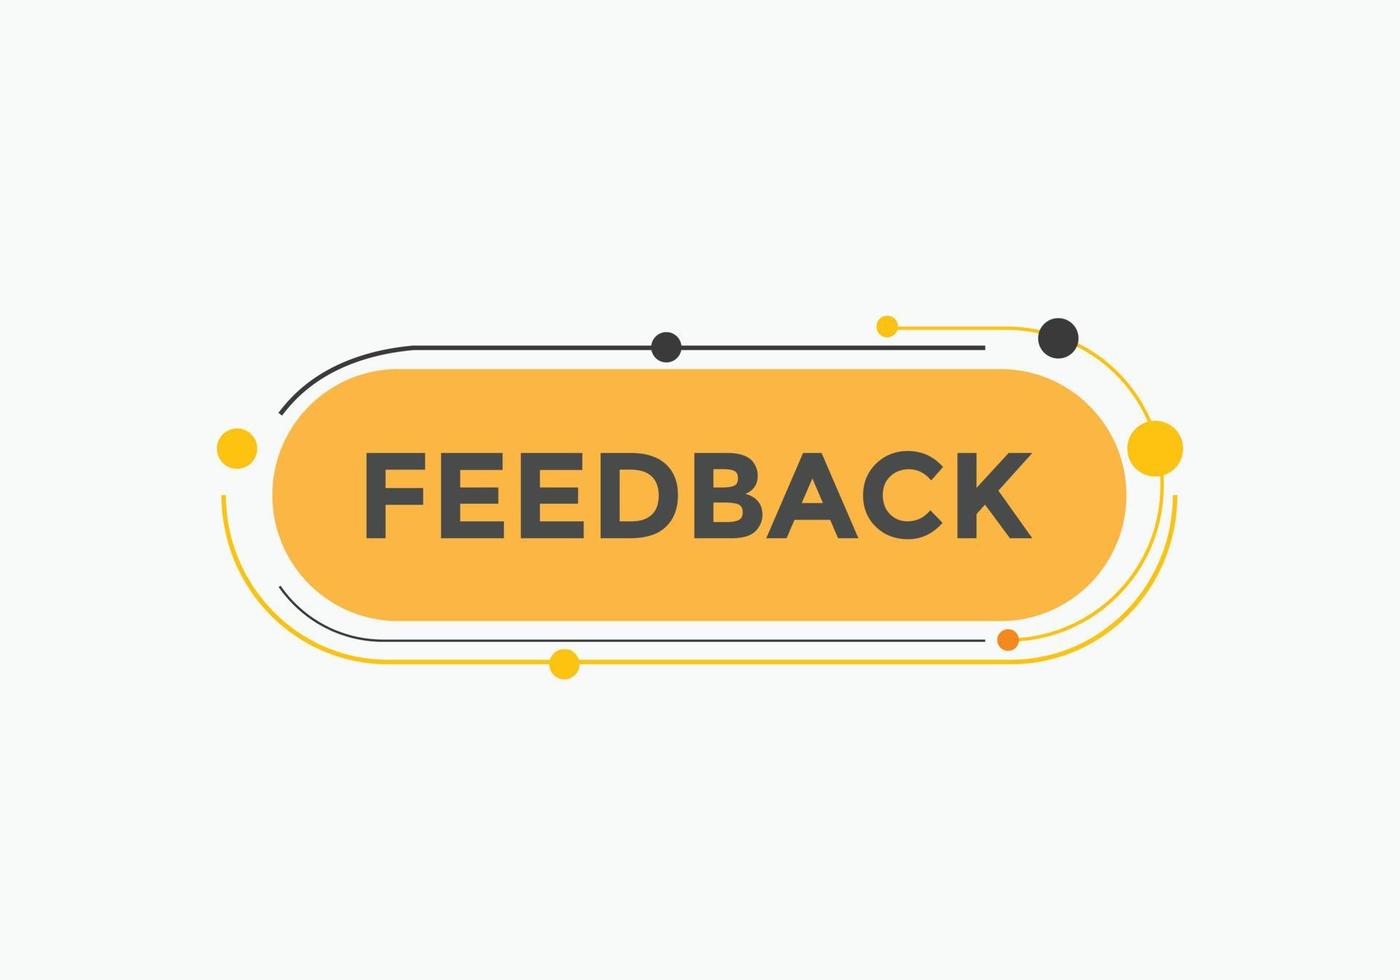 feedback button. feedback speech bubble. Colorful web banner. vector illustration. feedback sign icon